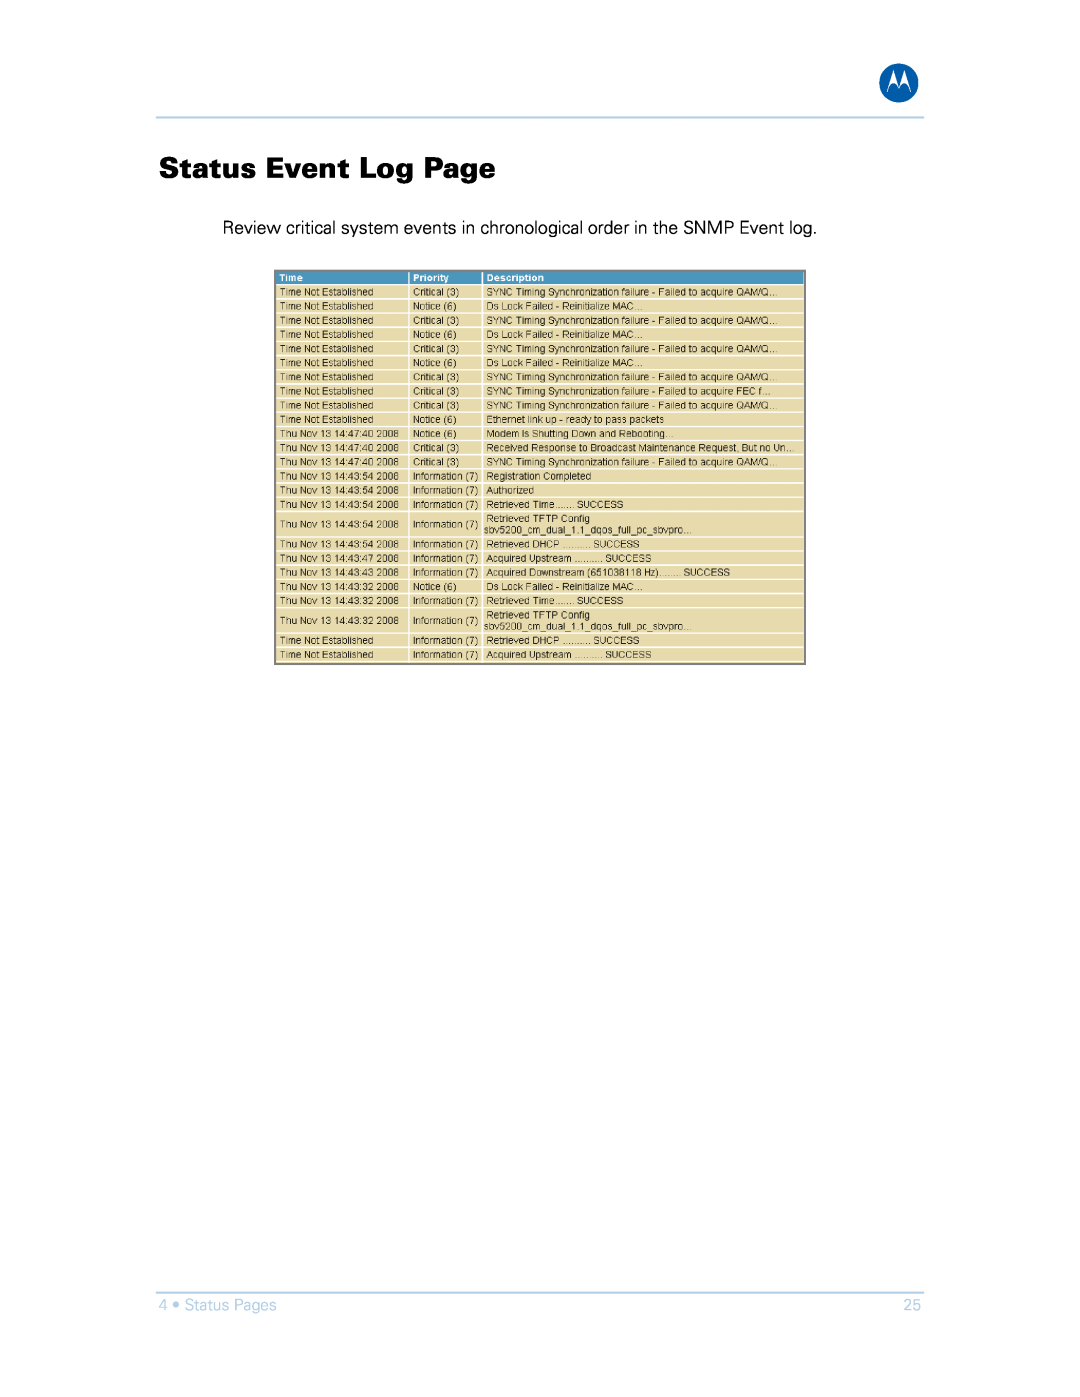 Motorola SVG1501E, SVG1501UE manual Status Event Log Page, Status Pages 